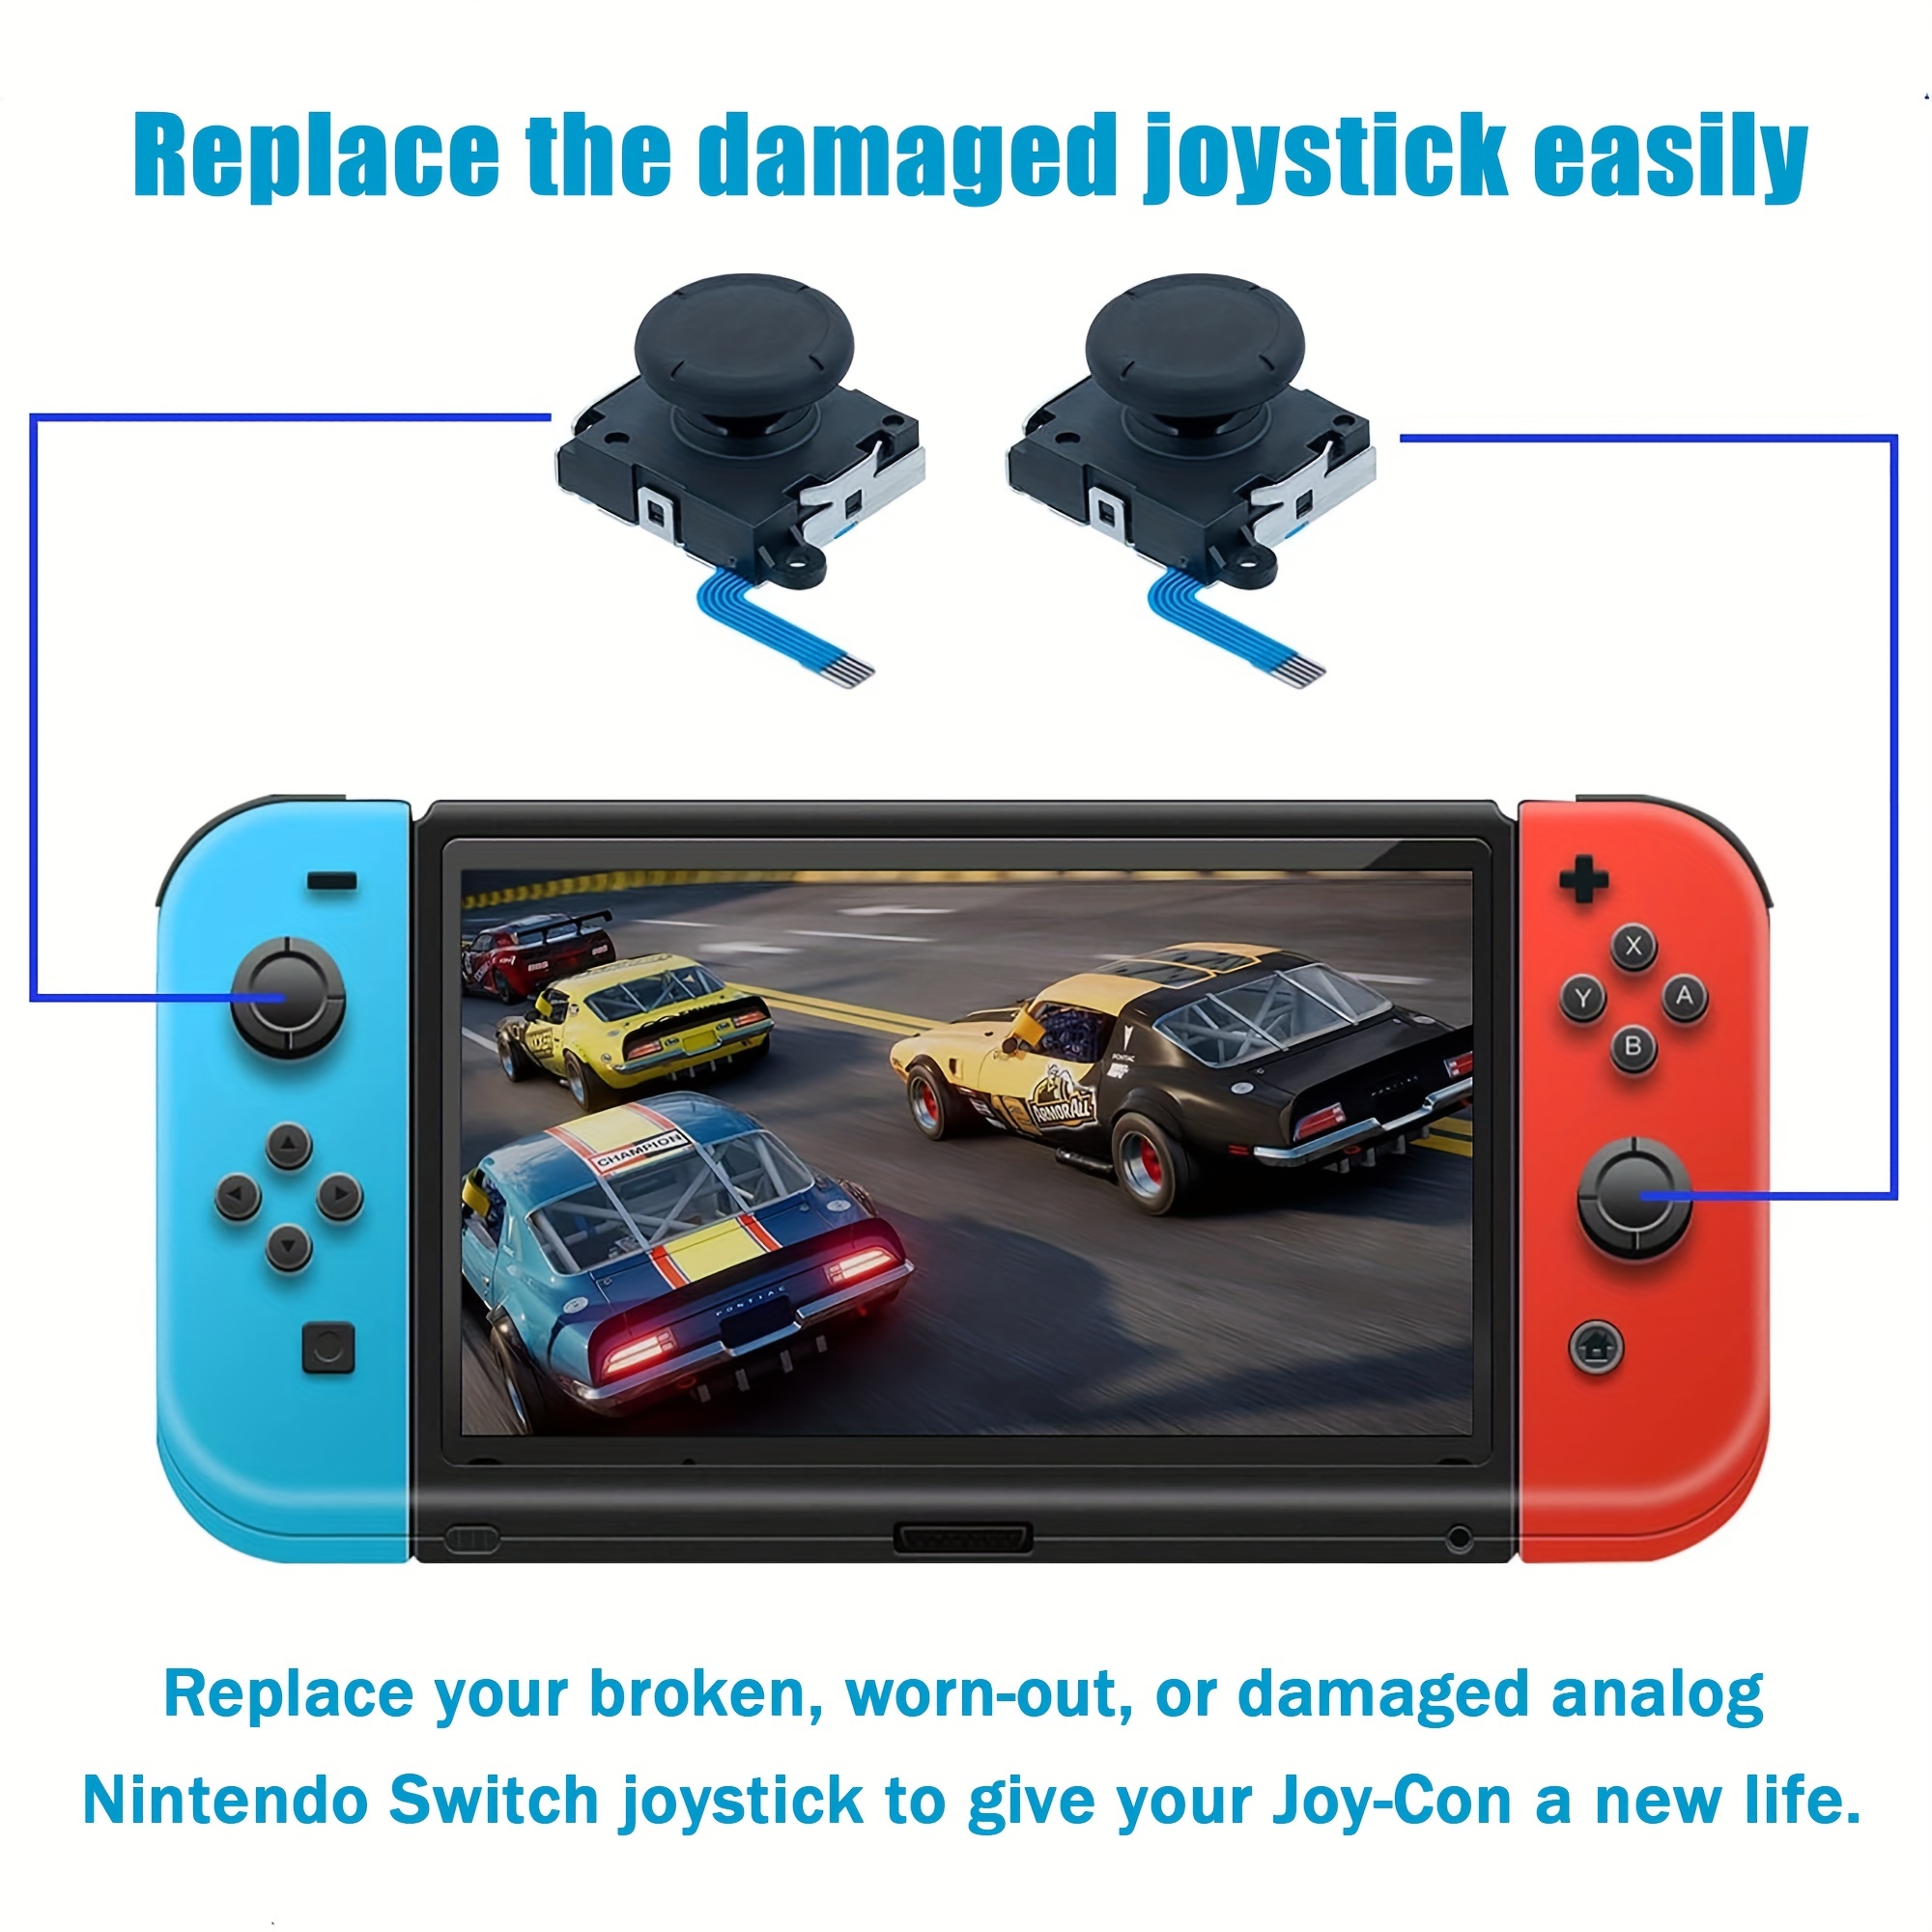 3D Joystick repair kit for Nintendo Switch Joy-con controllers